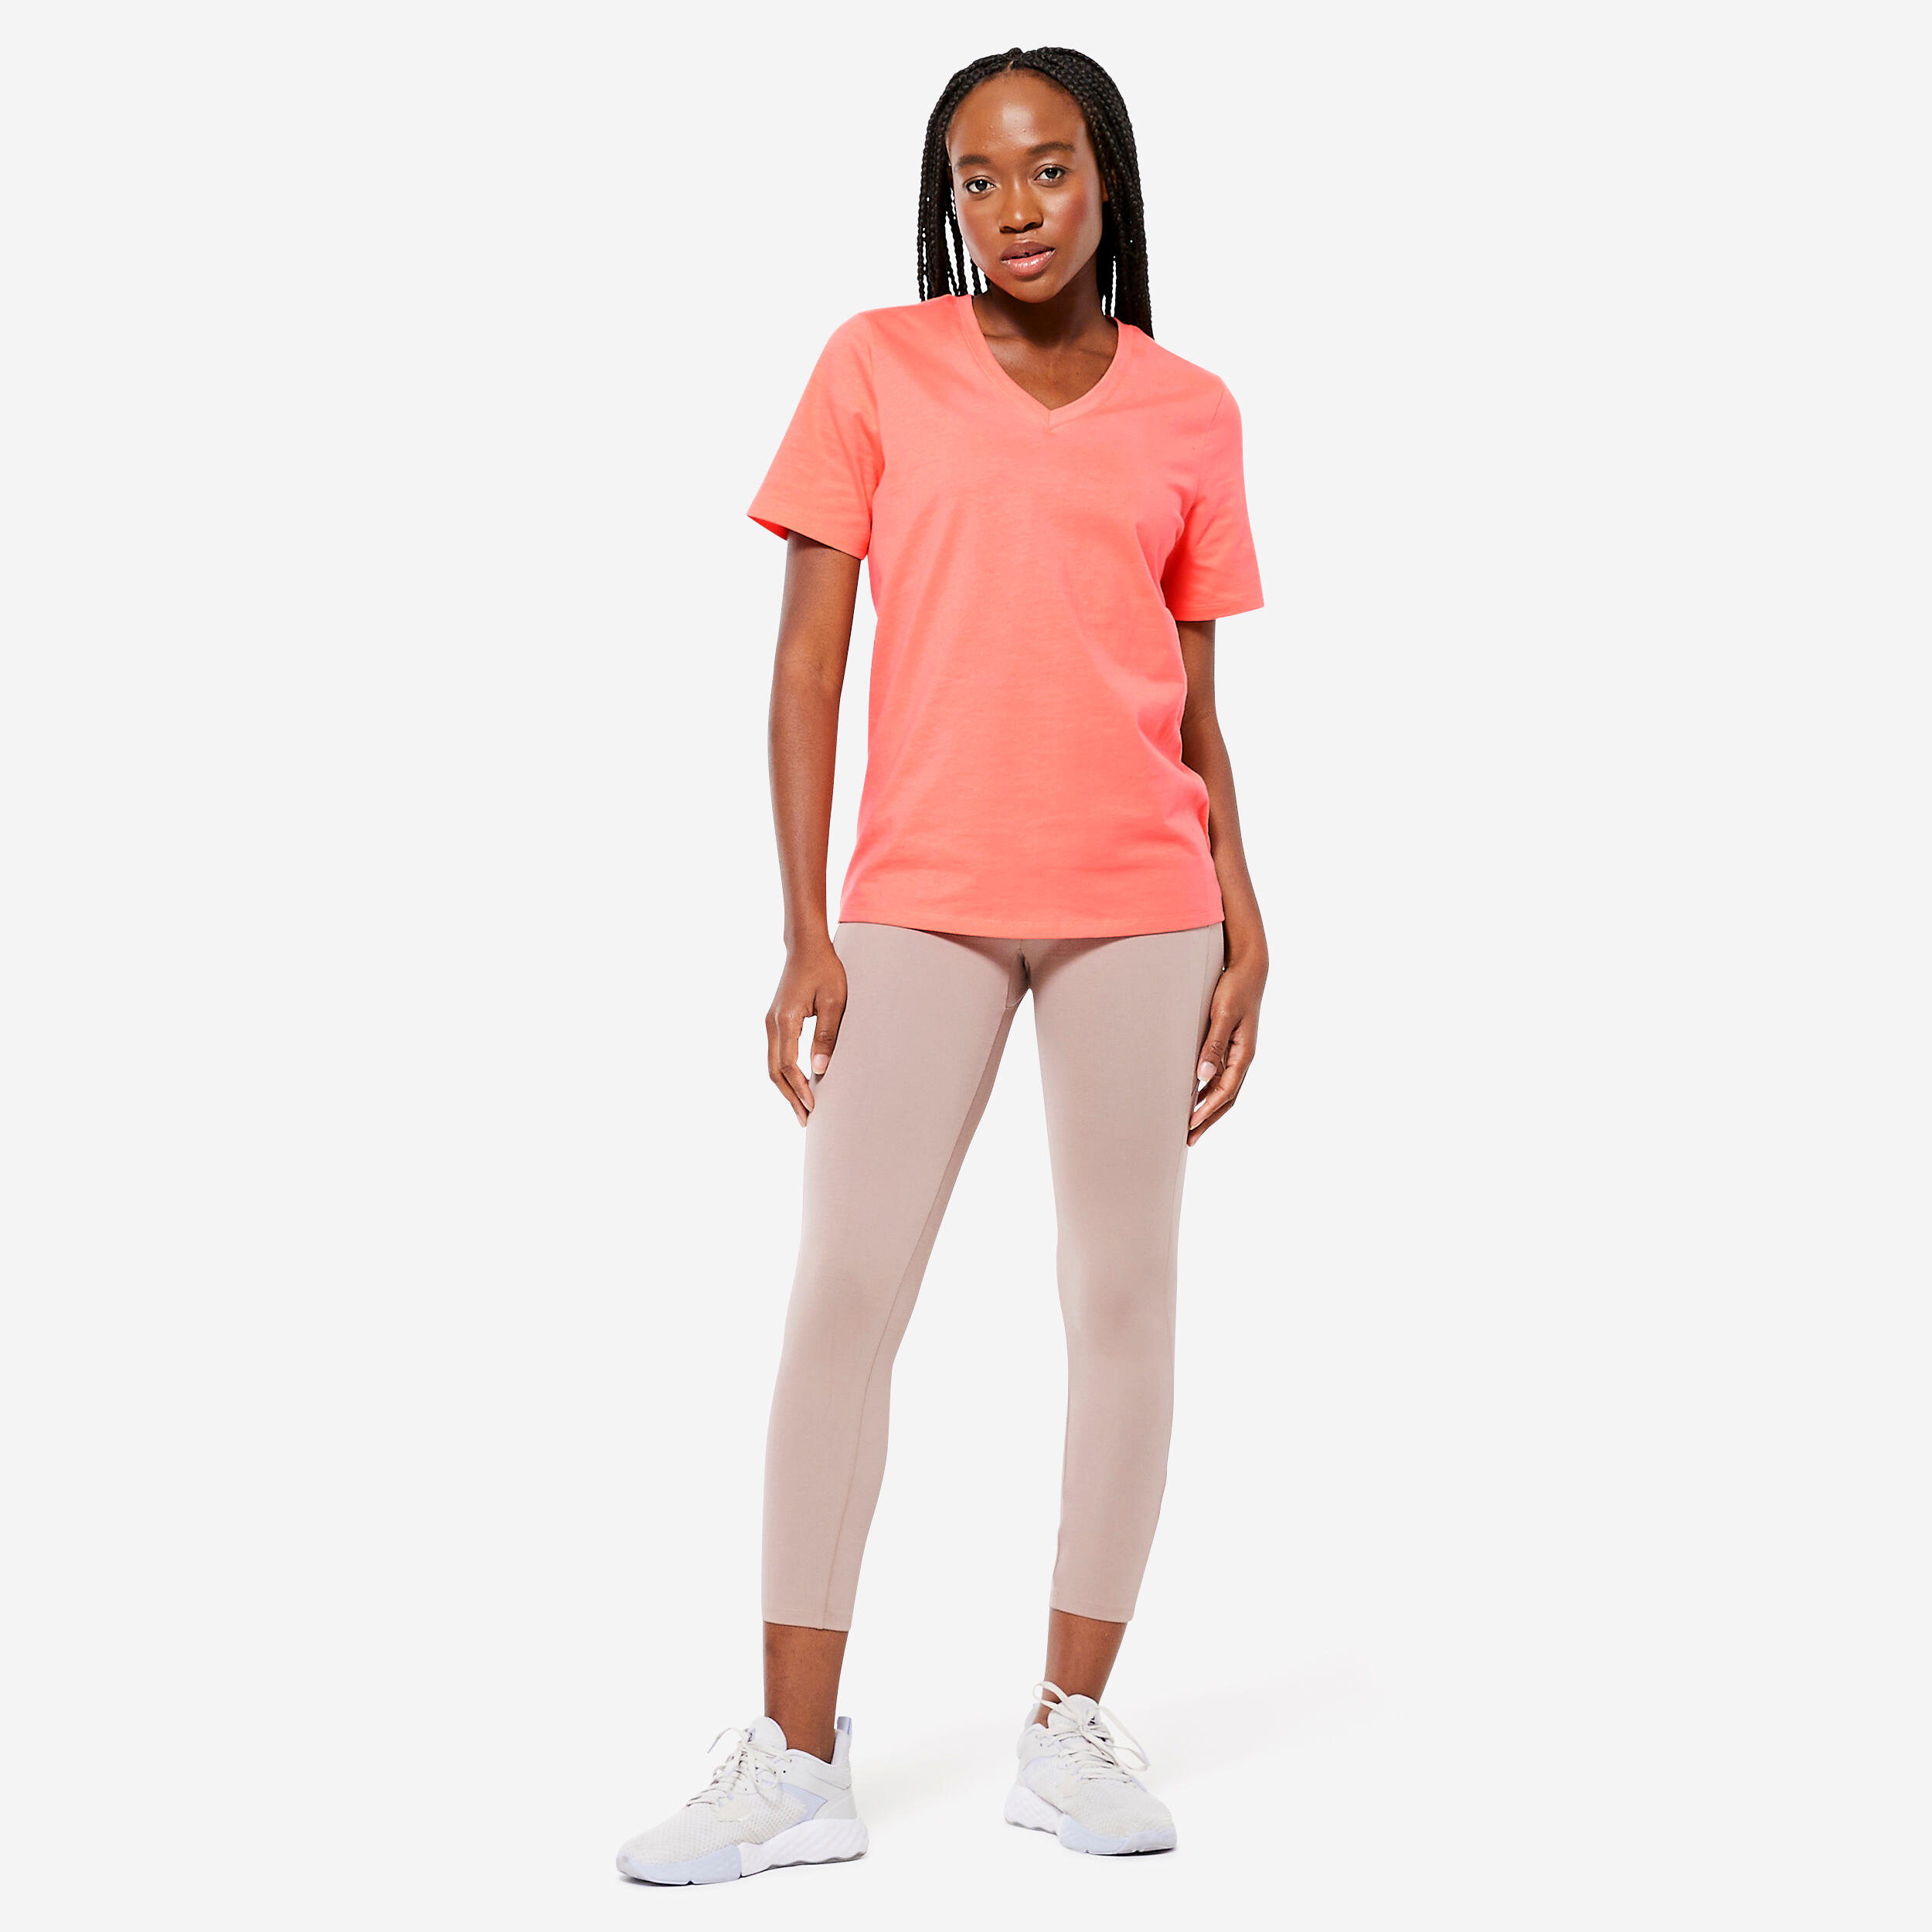 Women's V-Neck Fitness T-Shirt 500 - Pastel Pink 2/5